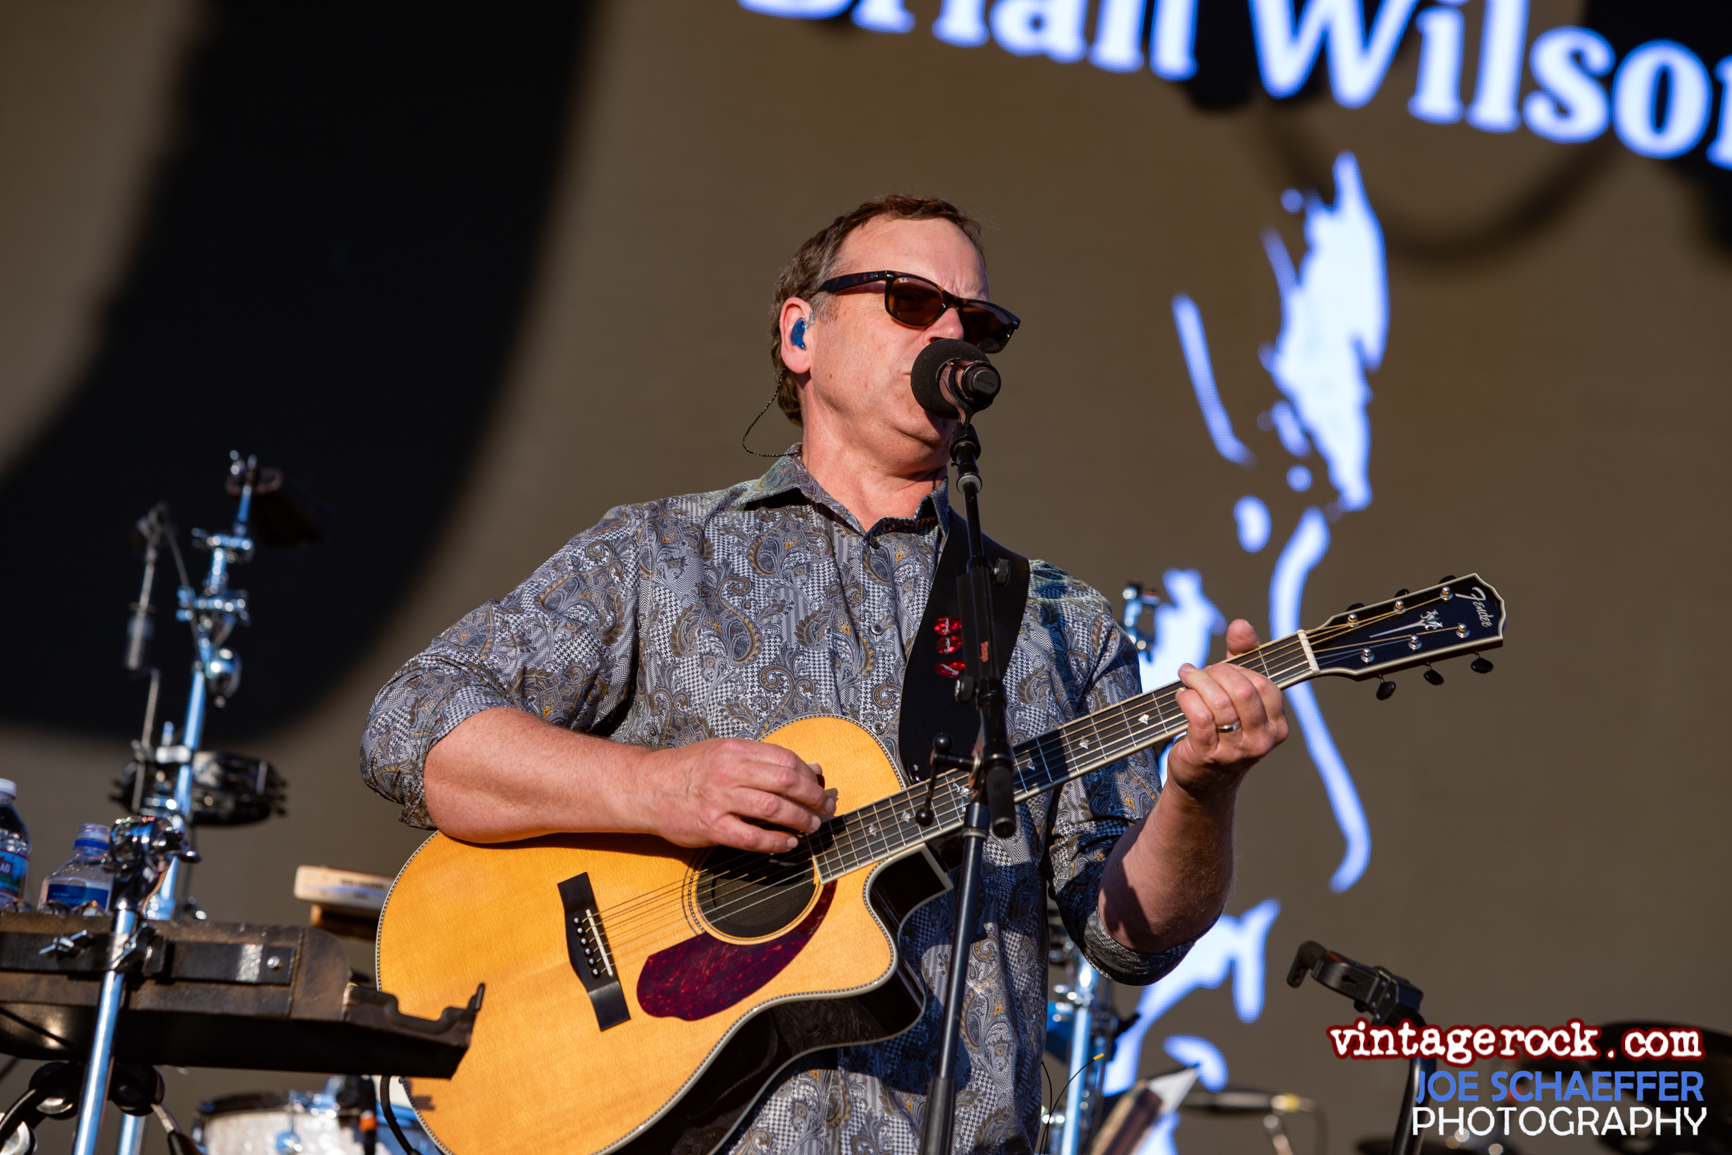 Tour — Brian Wilson